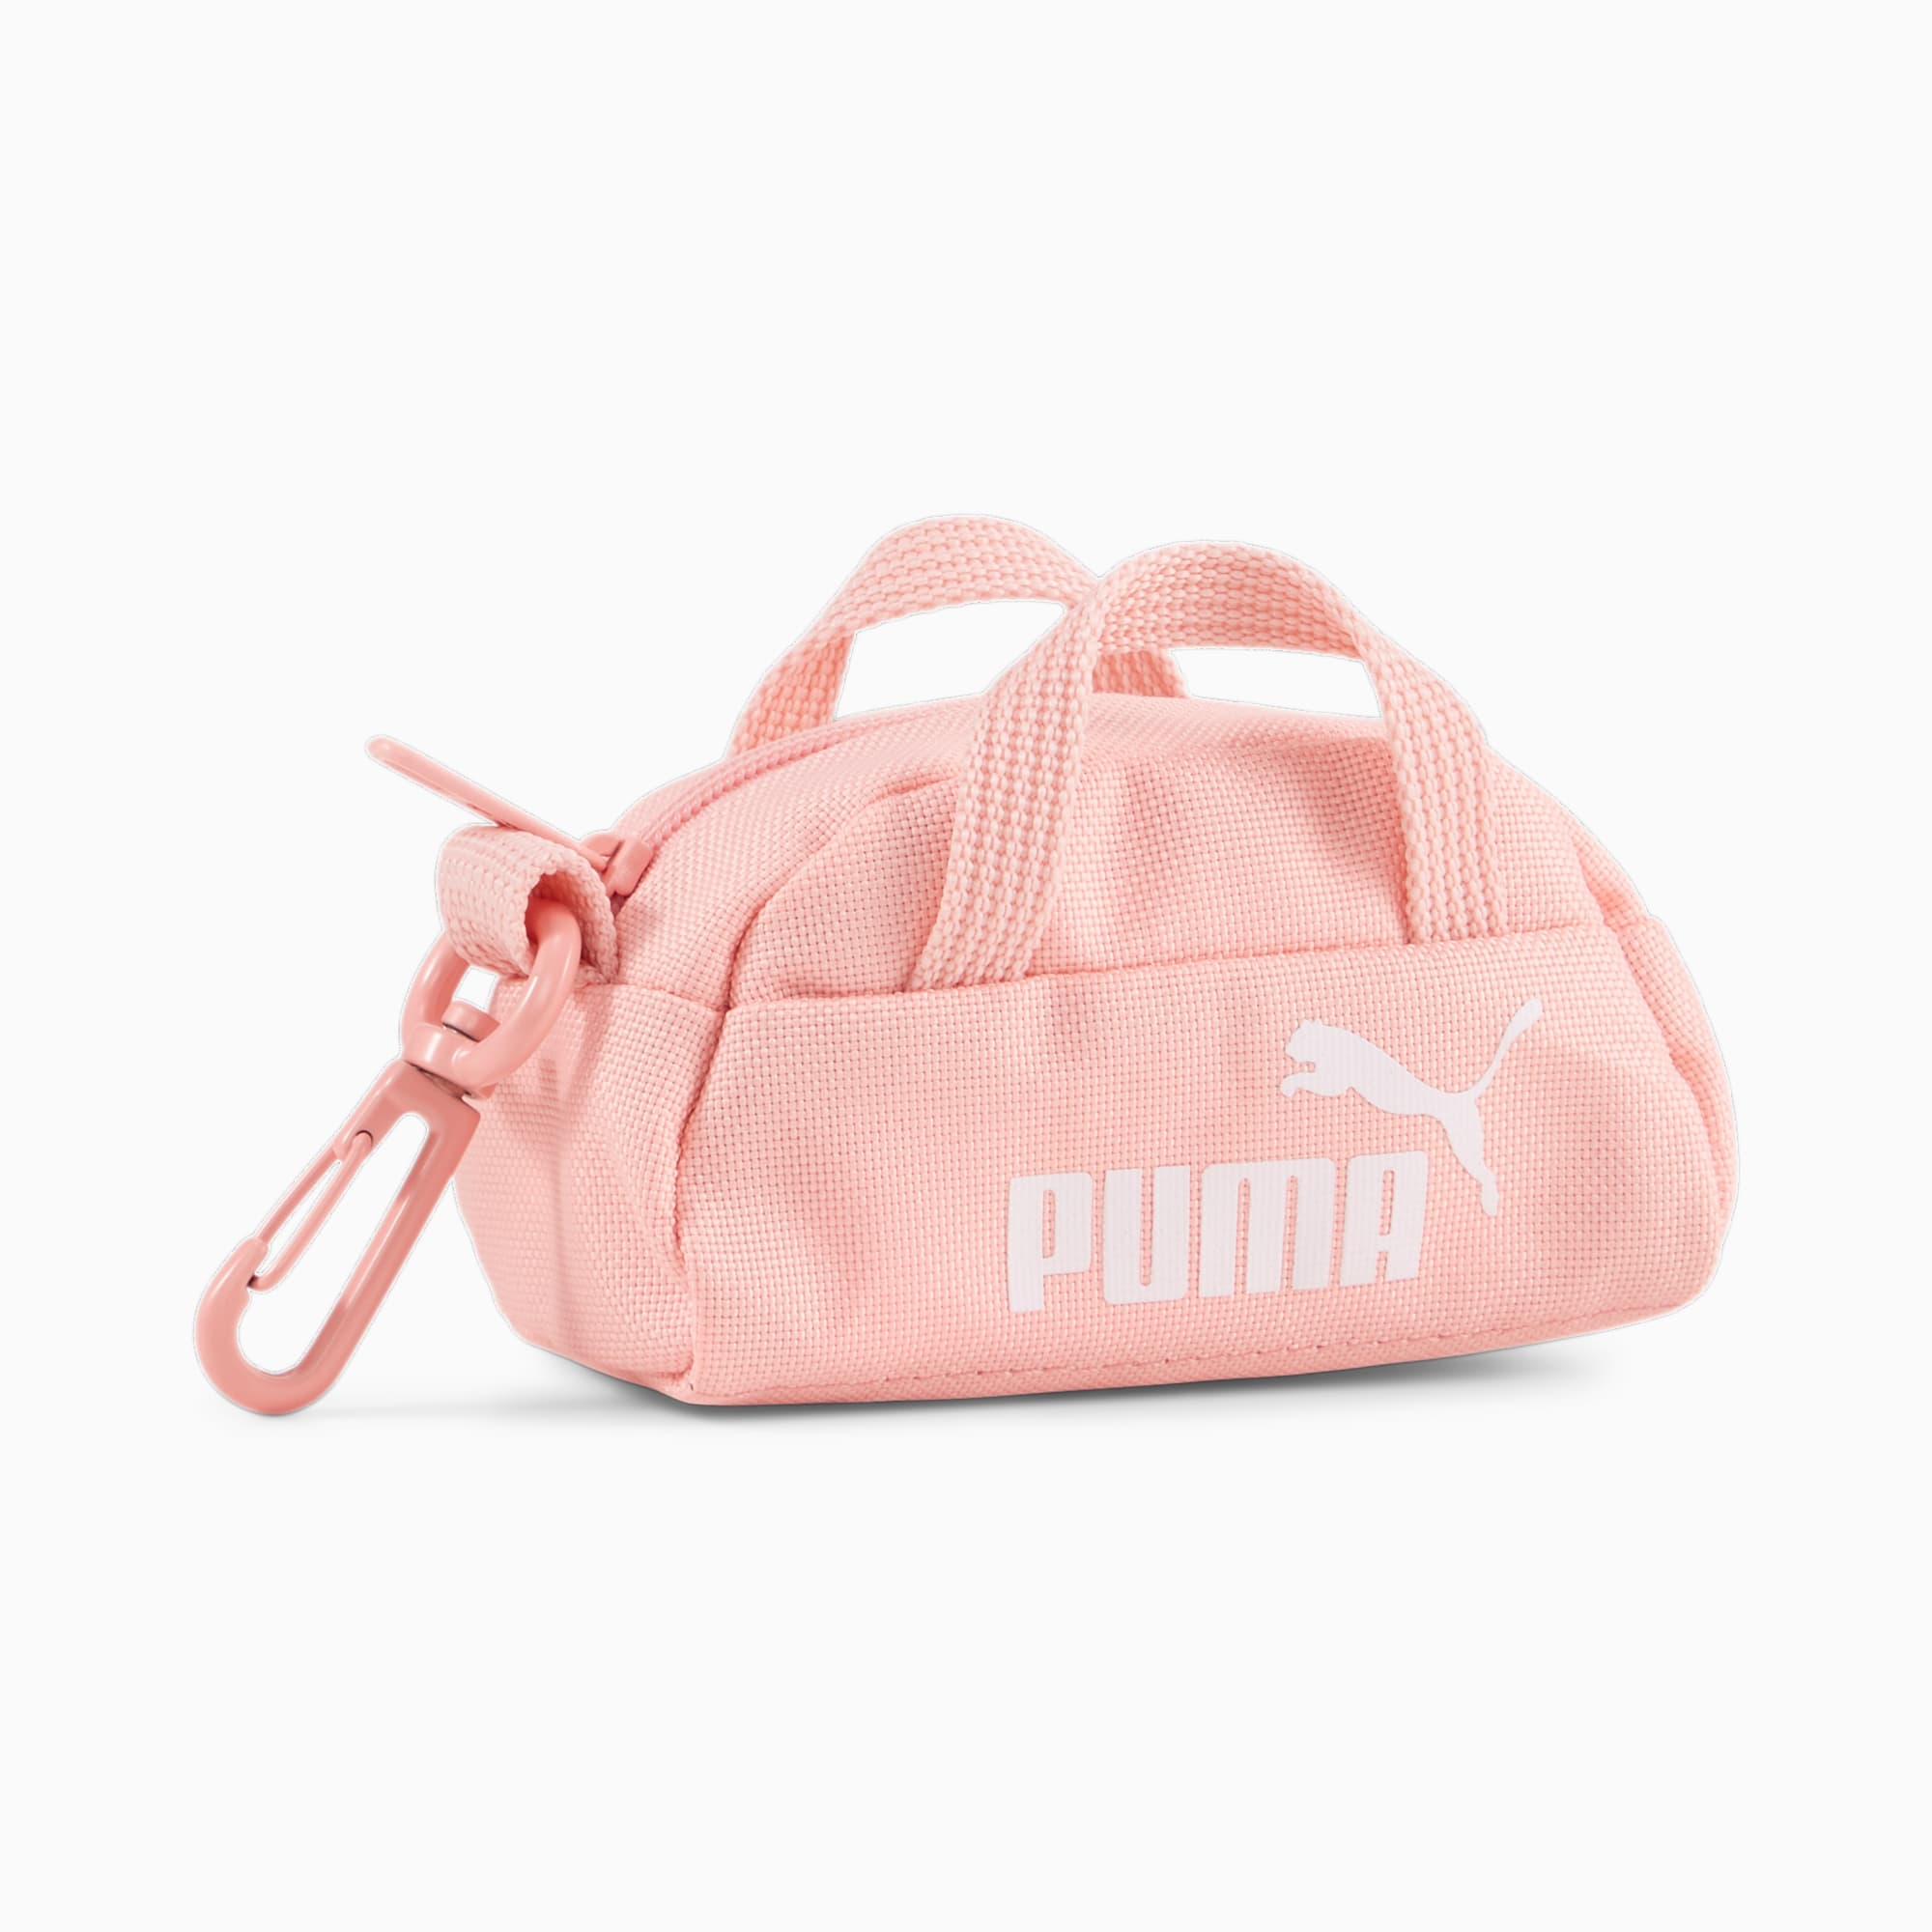 PUMA Phase Tiny Sports Bag | PUMA Shop All Puma | PUMA